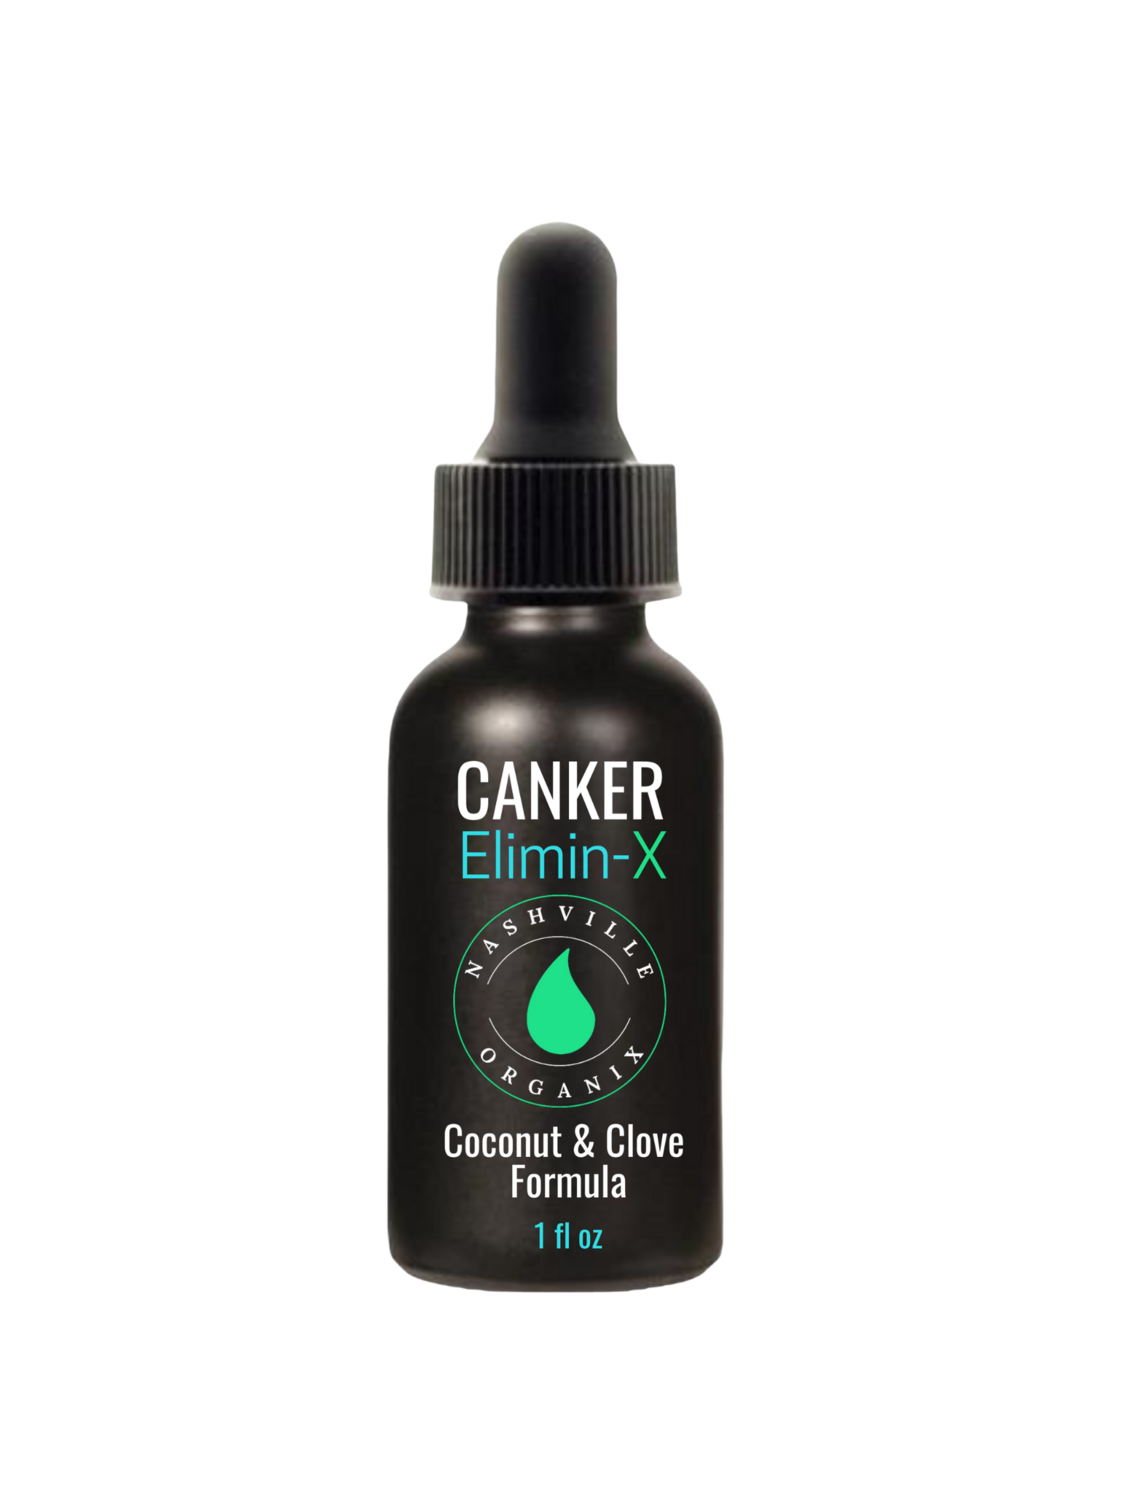 Canker Elimin-X